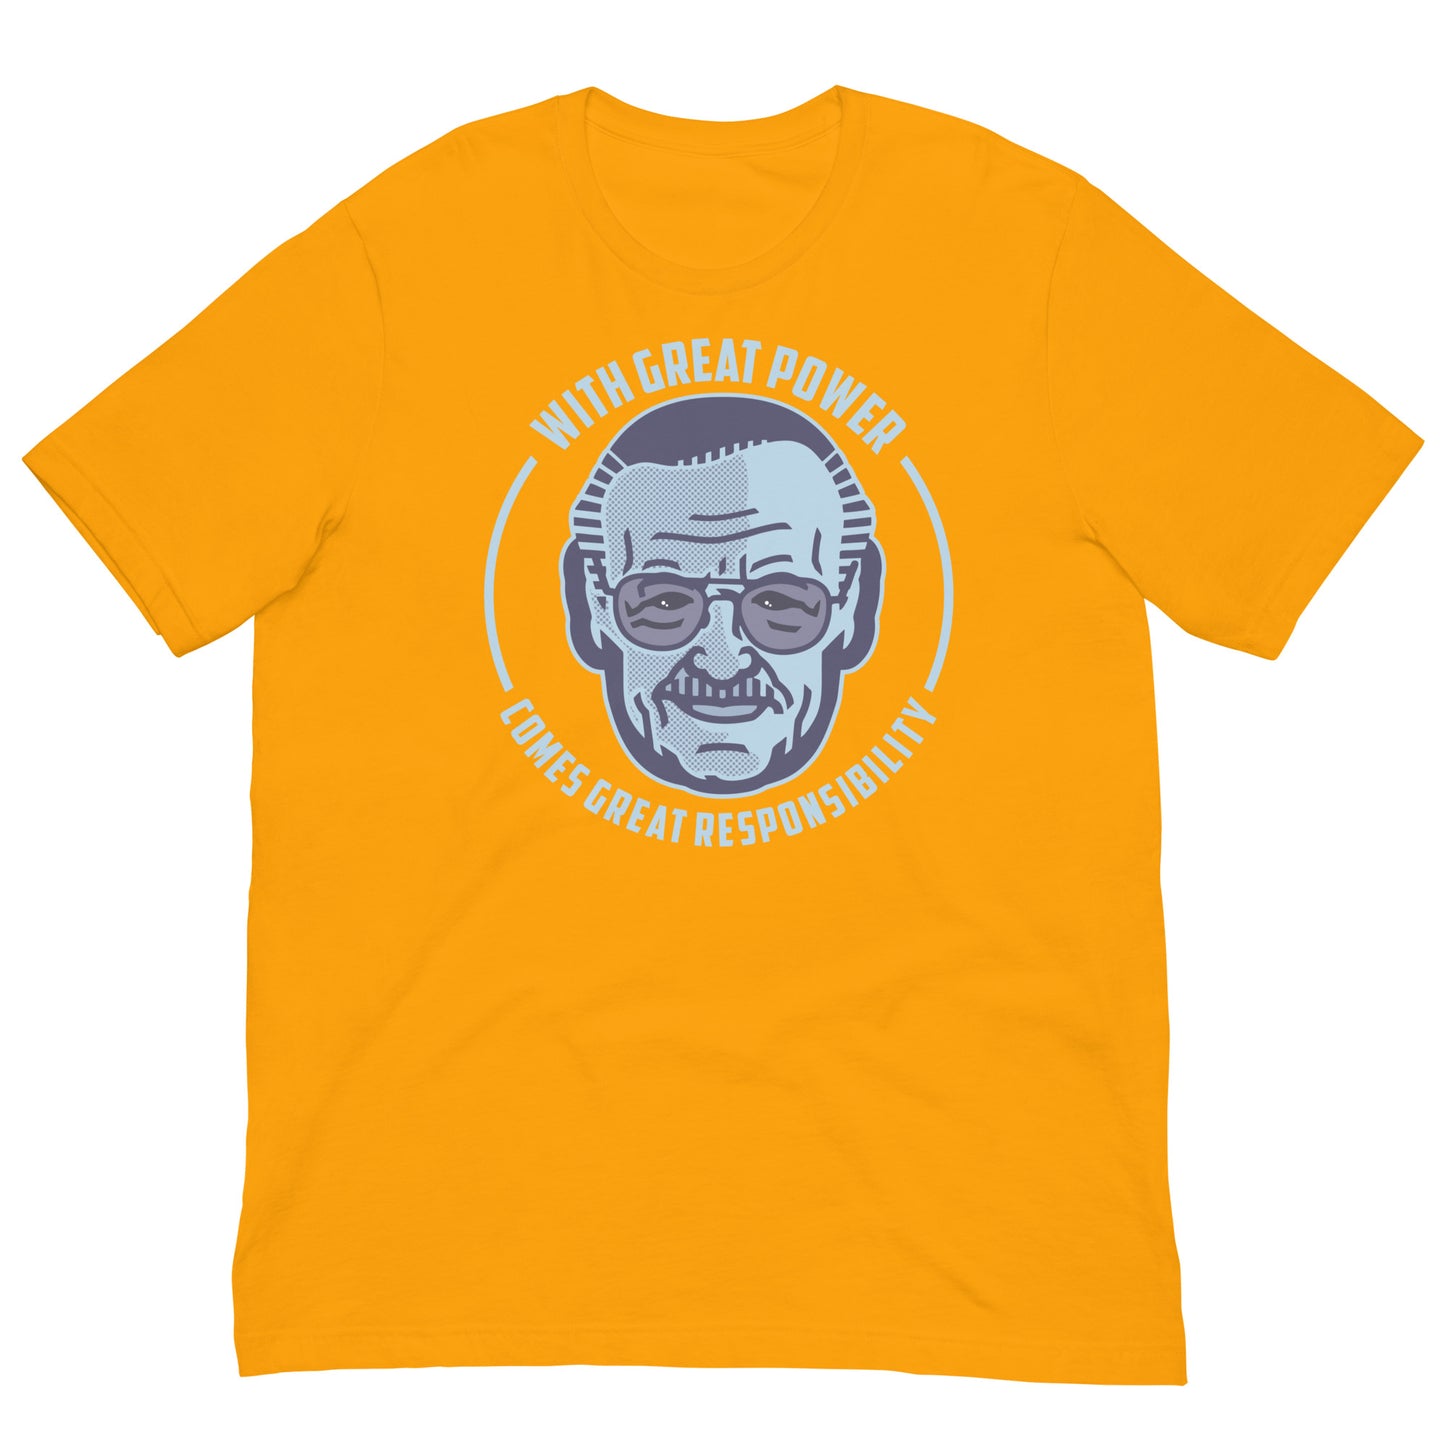 Stan Lee "Great Power" T-Shirt